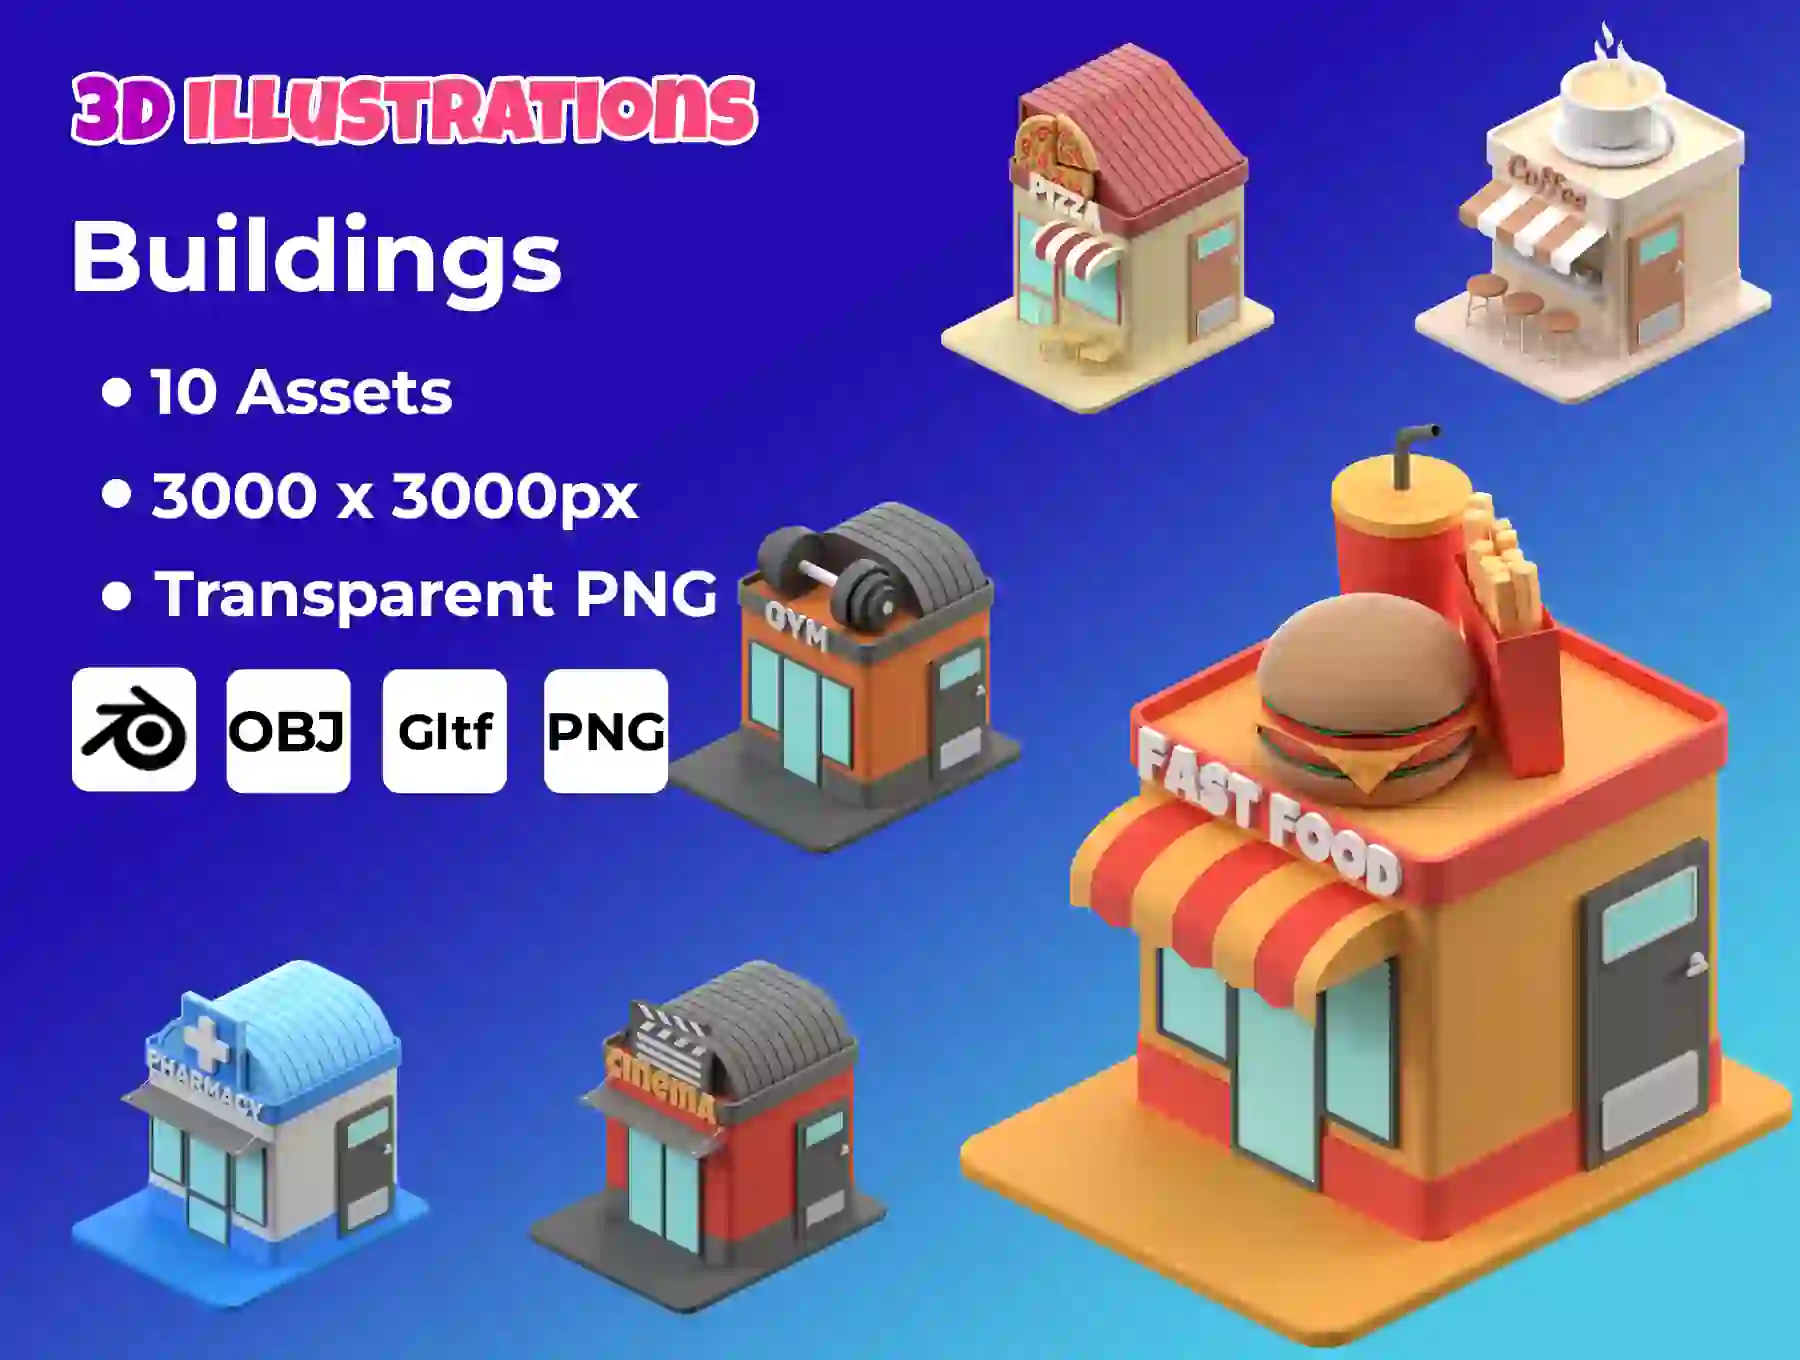 3D Building Illustrations